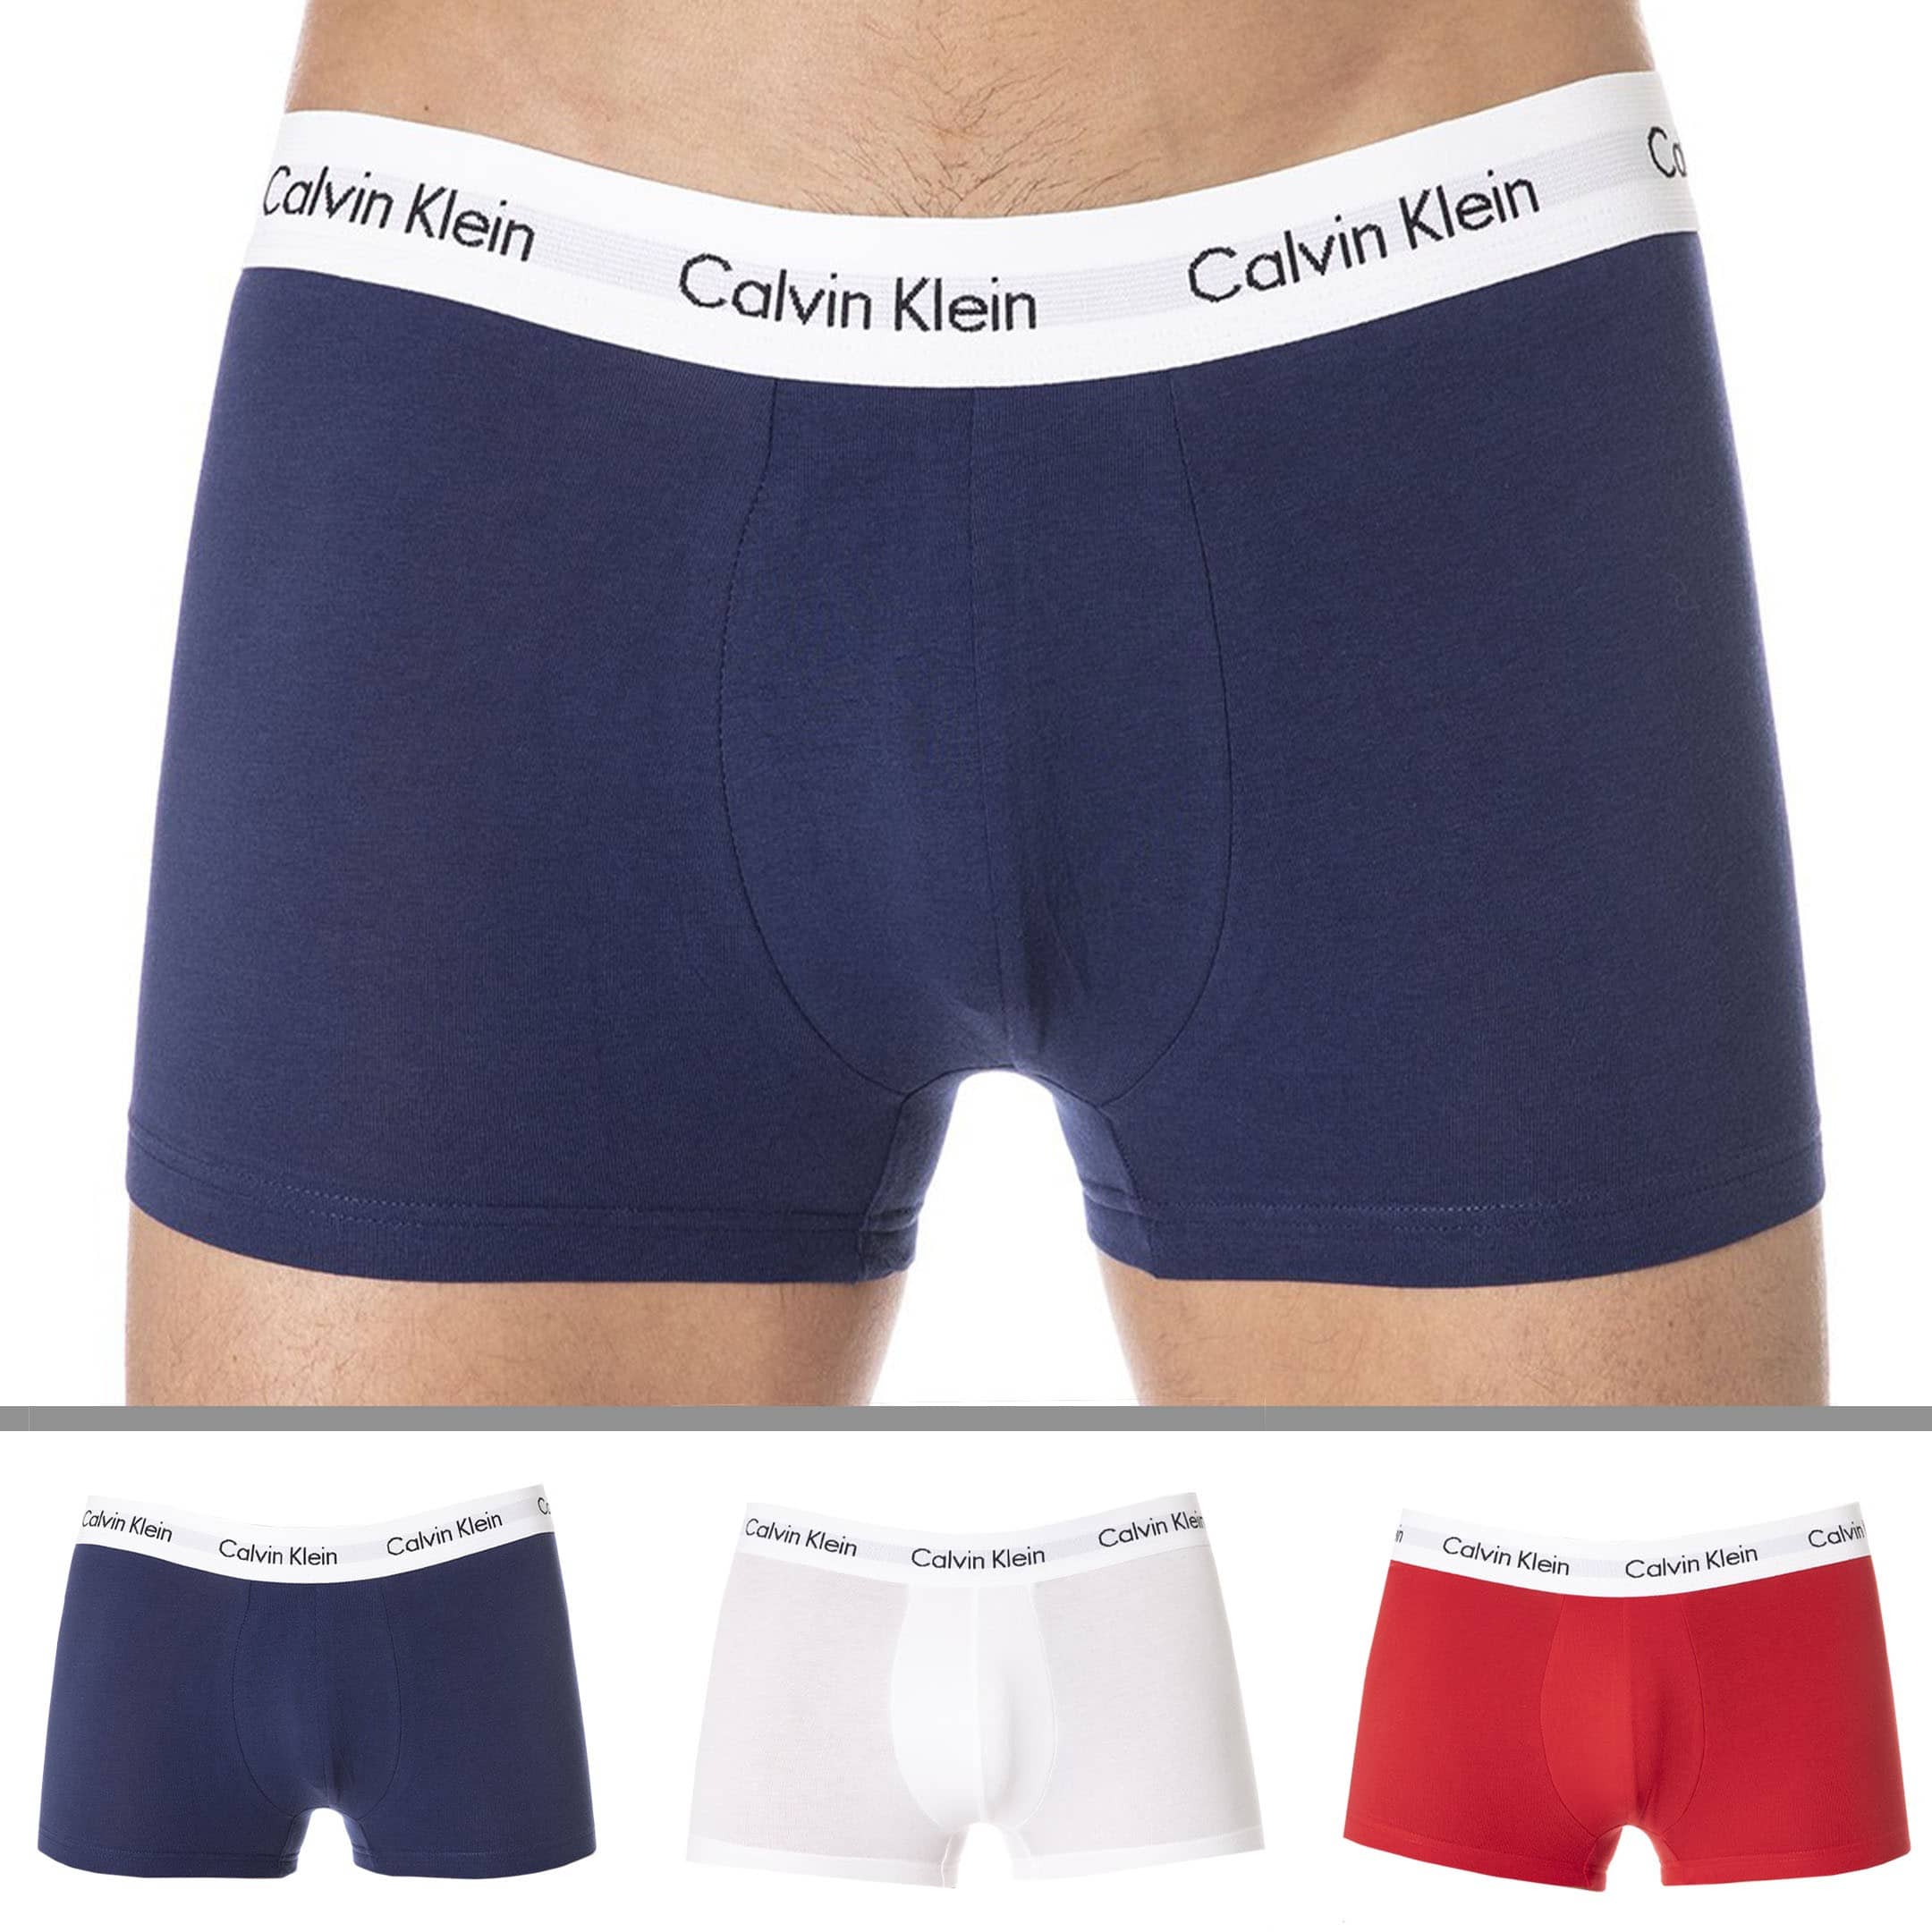 Calvin Klein Boxer Briefs Navy/White 2 Pk S, L, XL